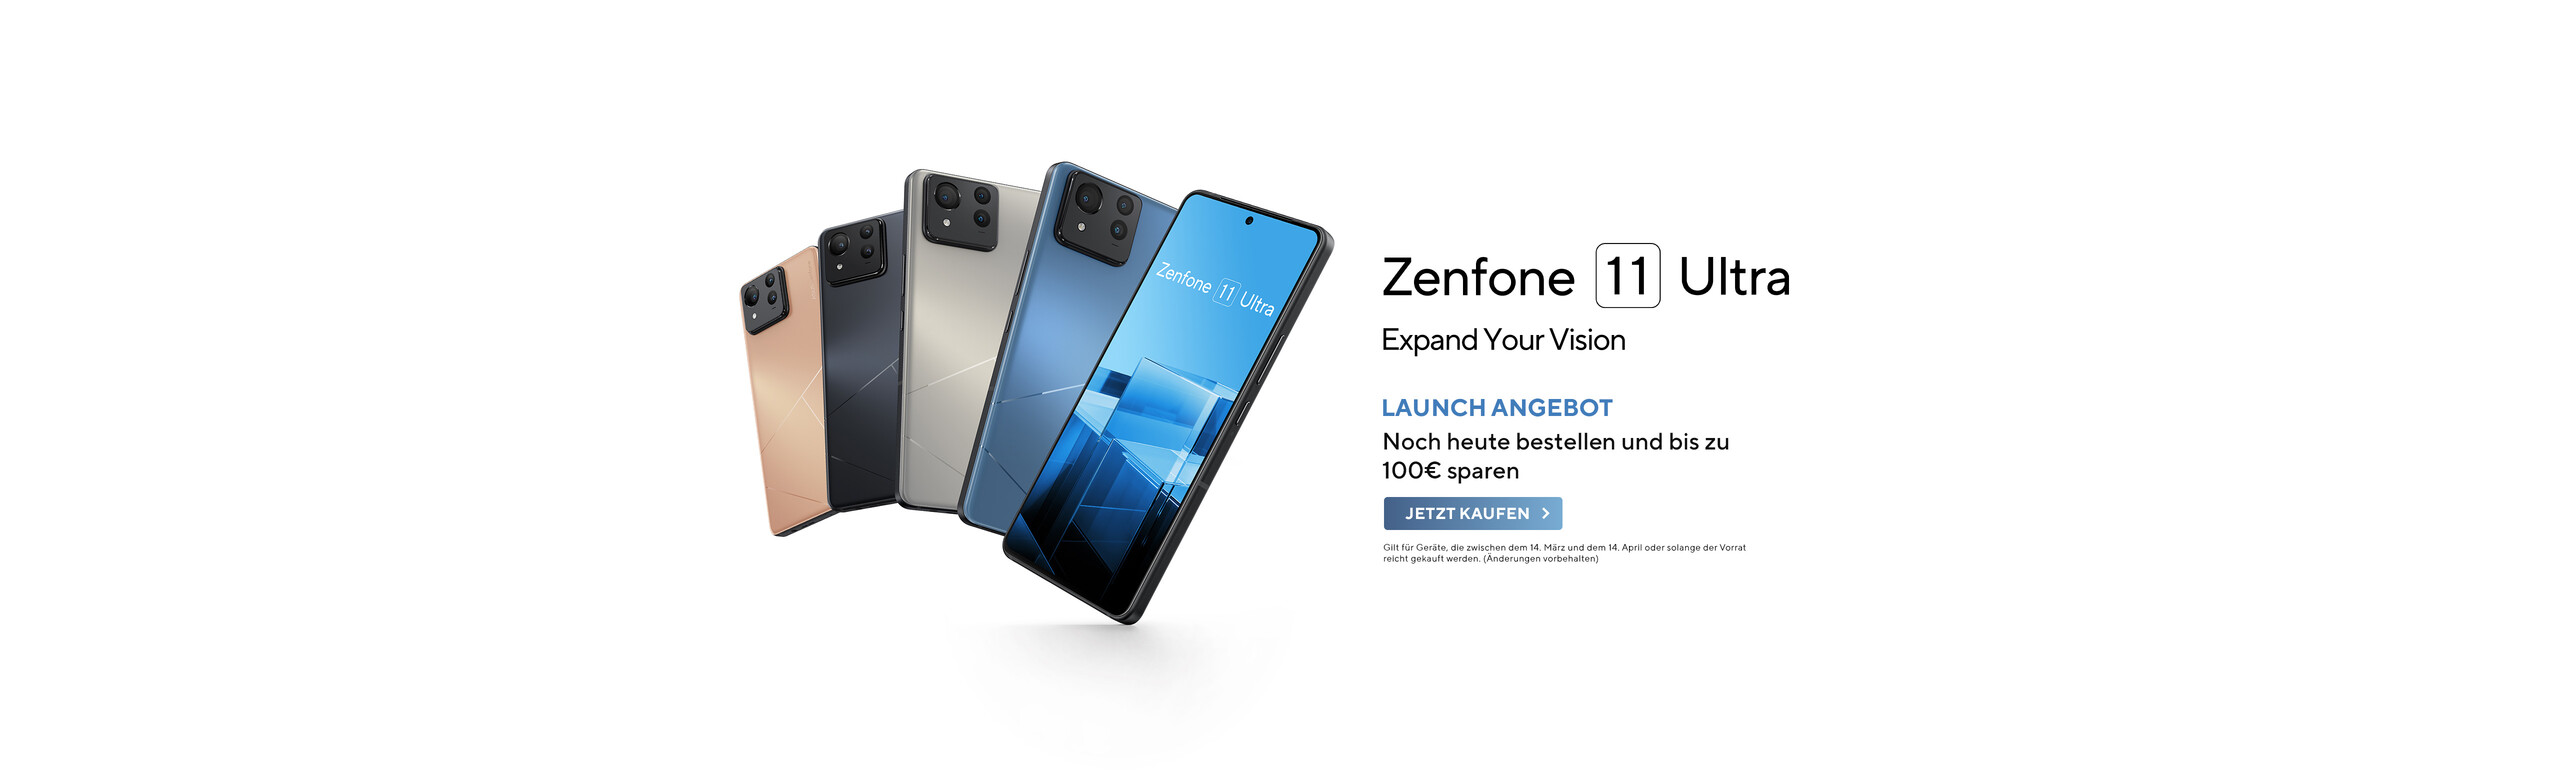 Zenfone 11